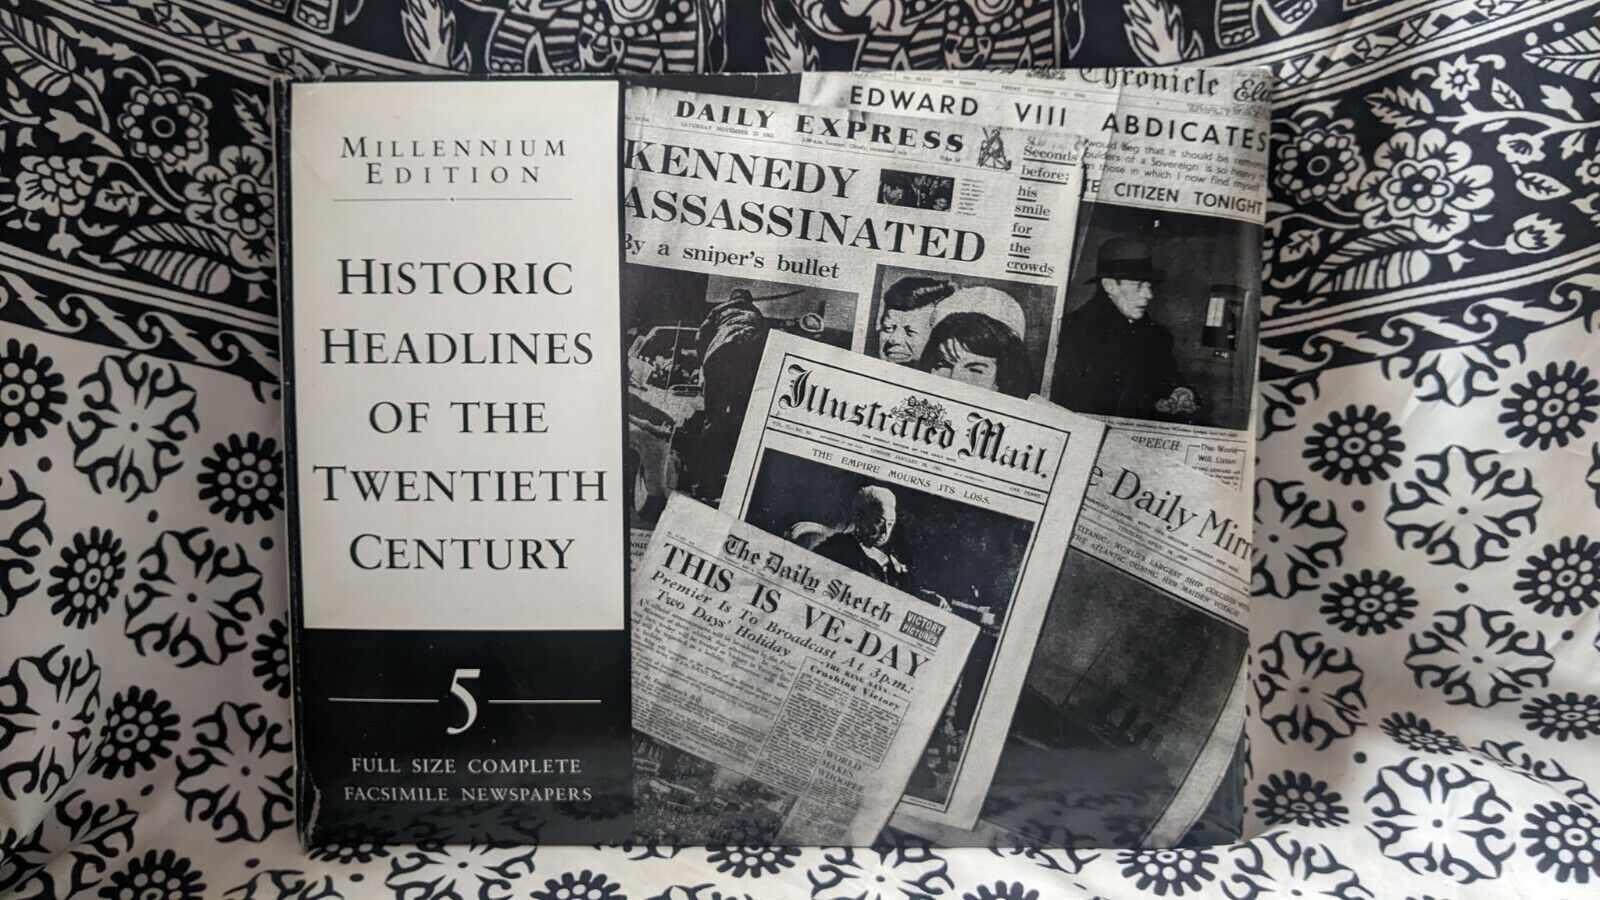 Millennium Edition Historic Headlines Of The Twentieth Century, 1999